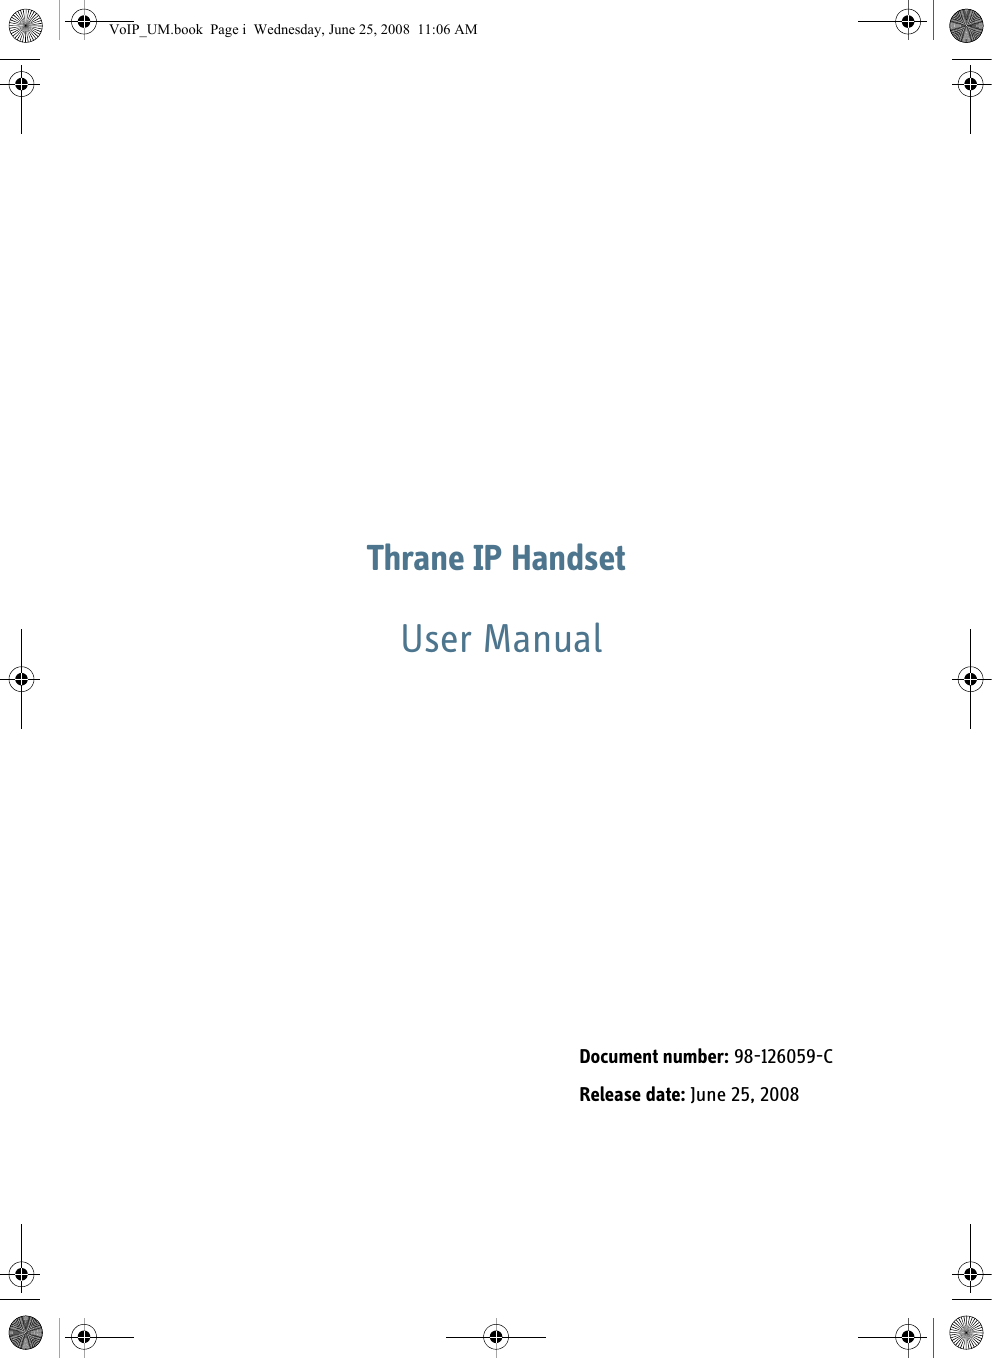 Thrane IP Handset User ManualDocument number: 98-126059-CRelease date: June 25, 2008VoIP_UM.book  Page i  Wednesday, June 25, 2008  11:06 AM